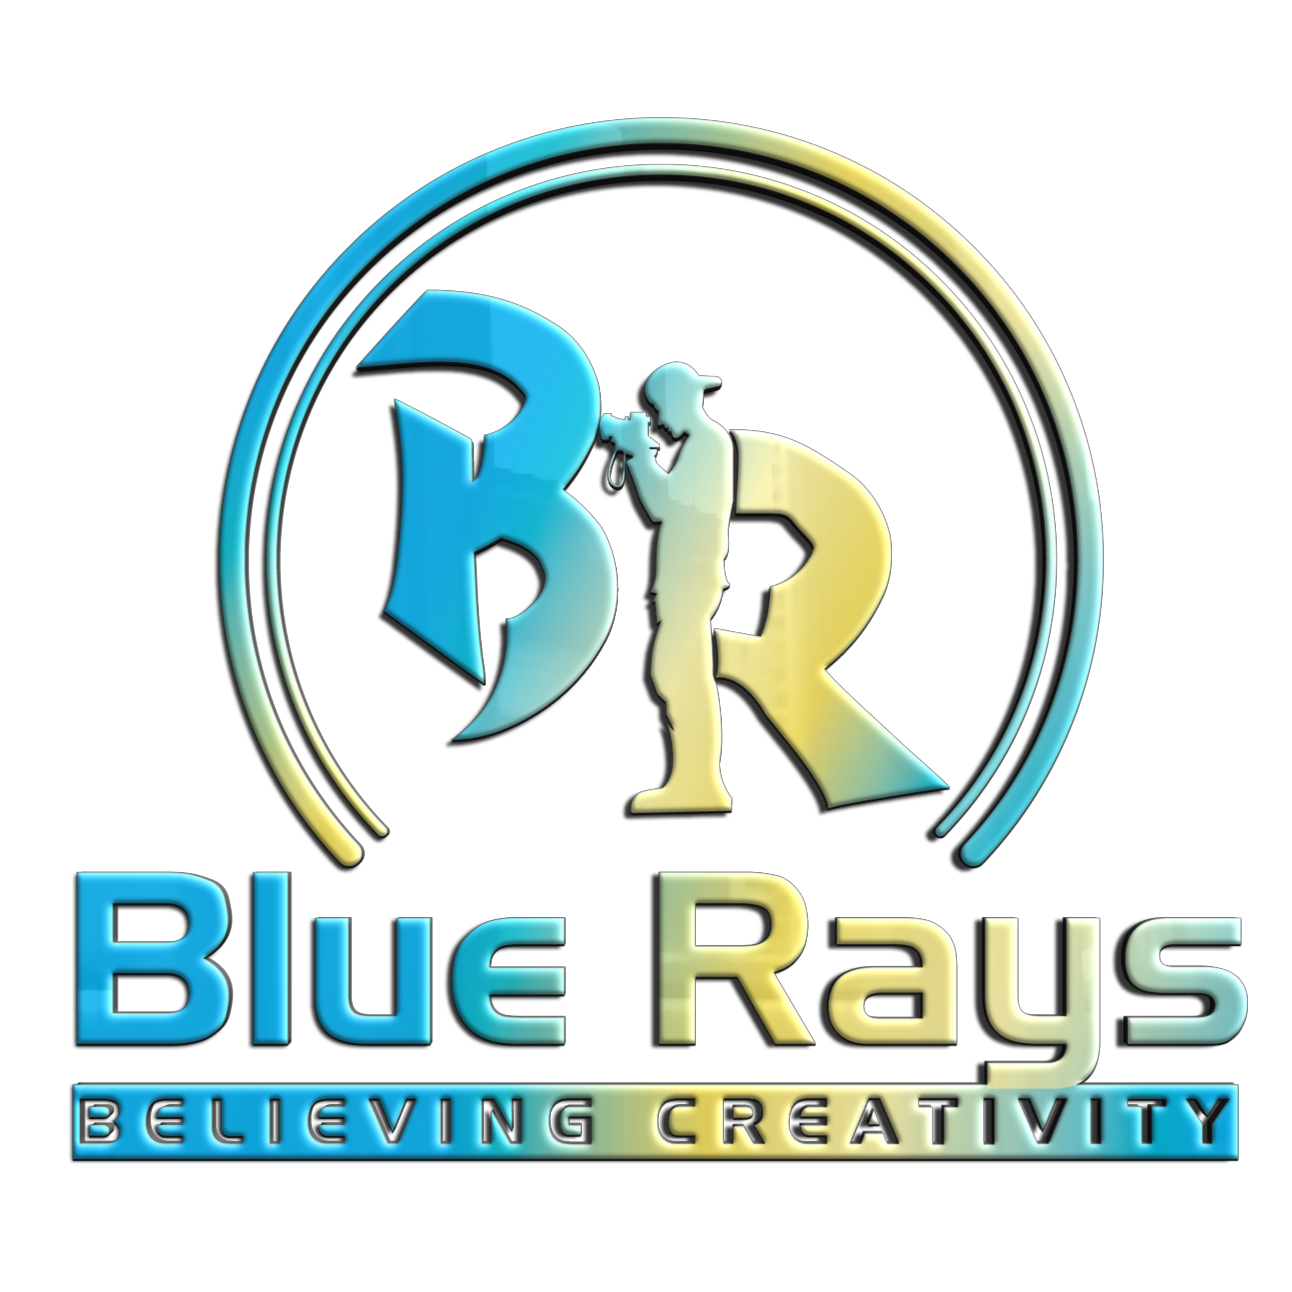 Studio Blue Rays